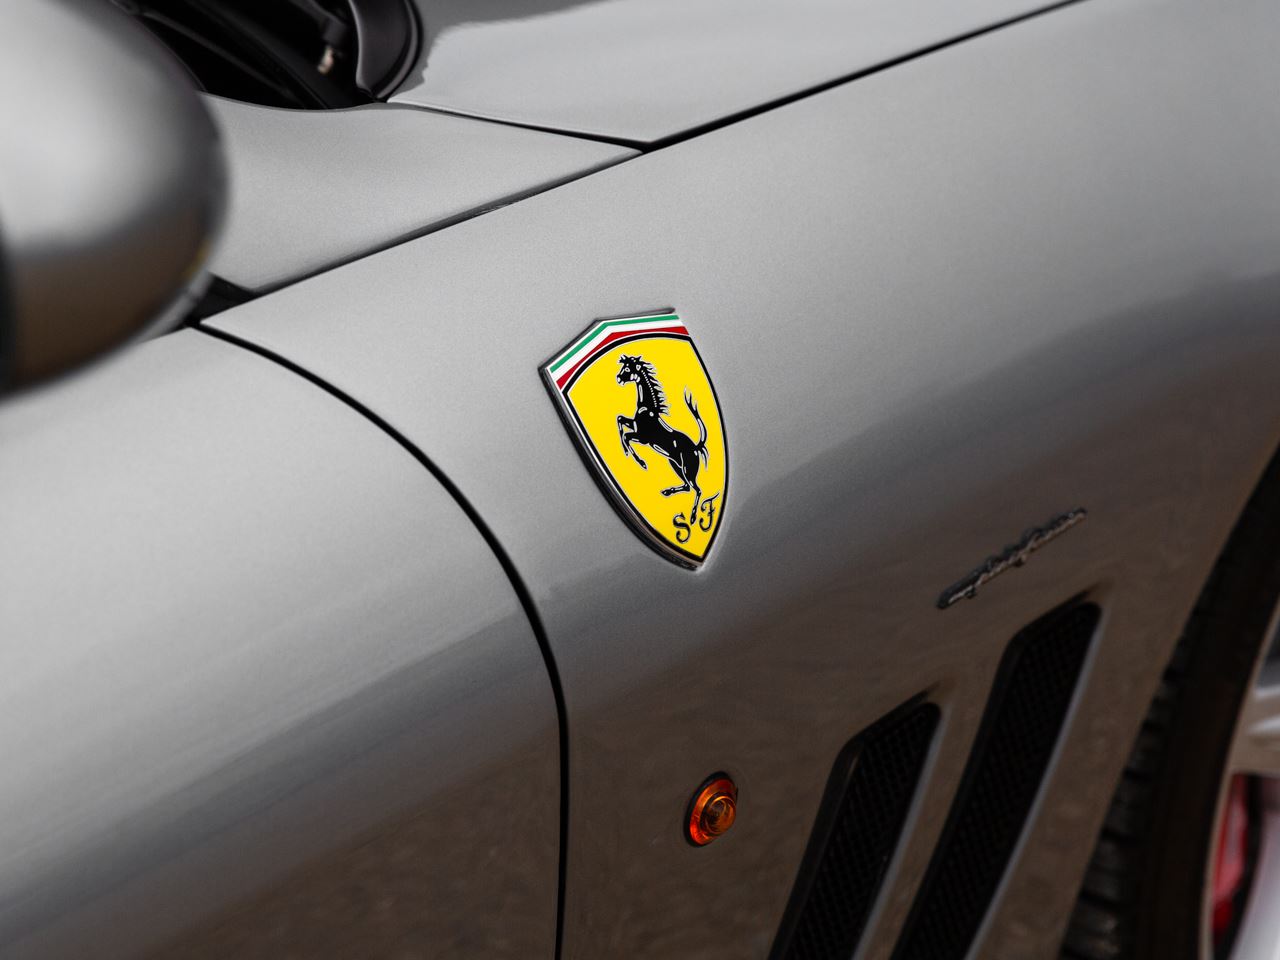 Ferrari 575m 9ff70l6vntqnjyag crjd